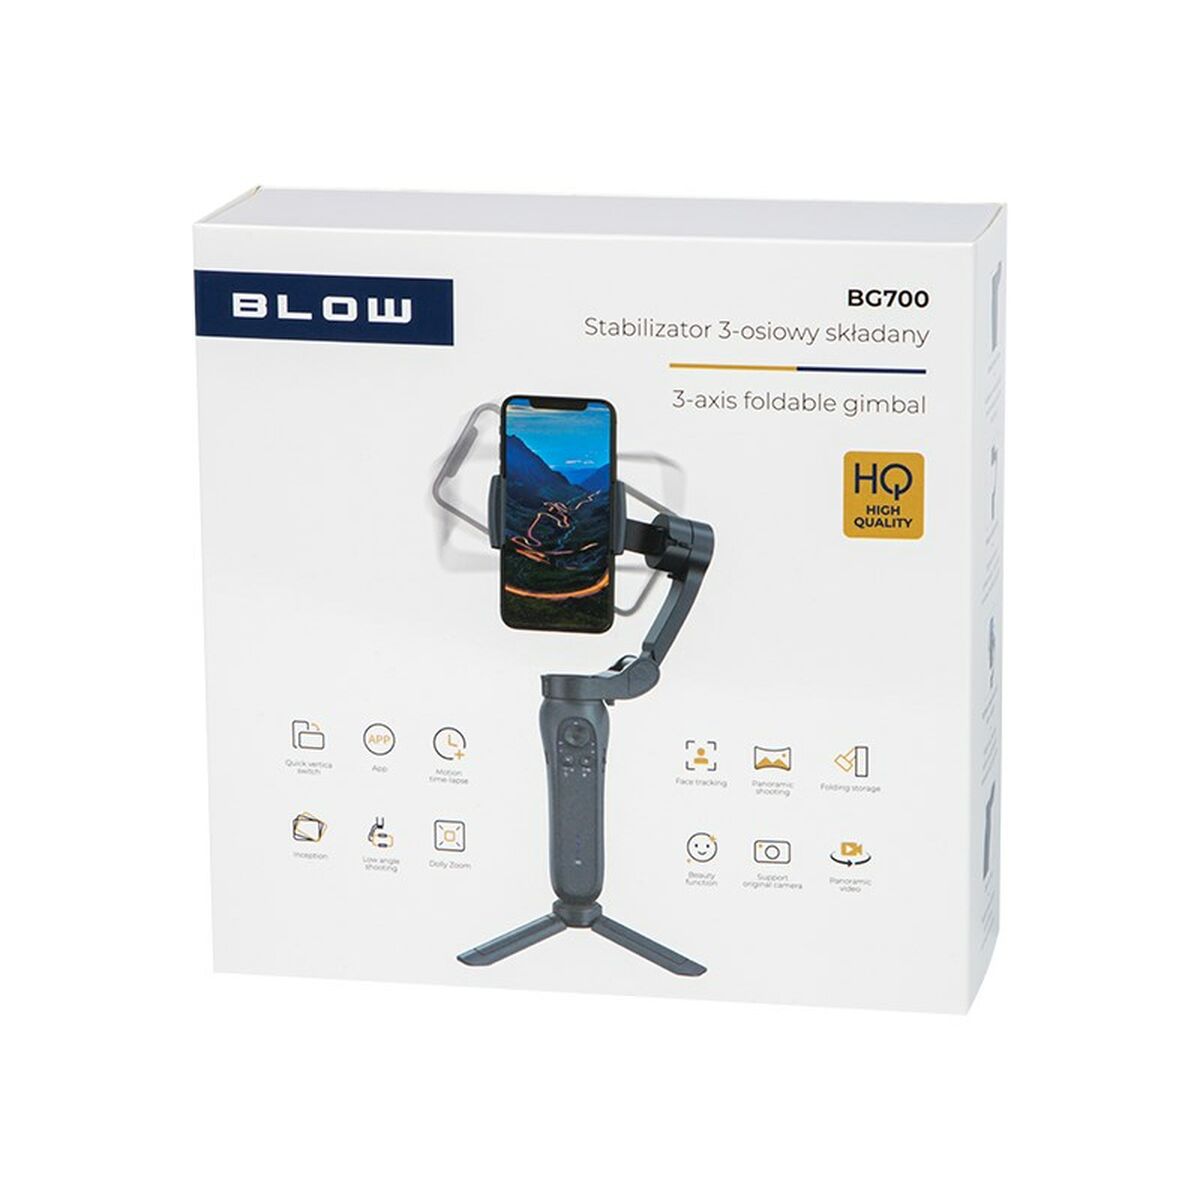 Camera Stabiliser for Smartphone Blow BG700